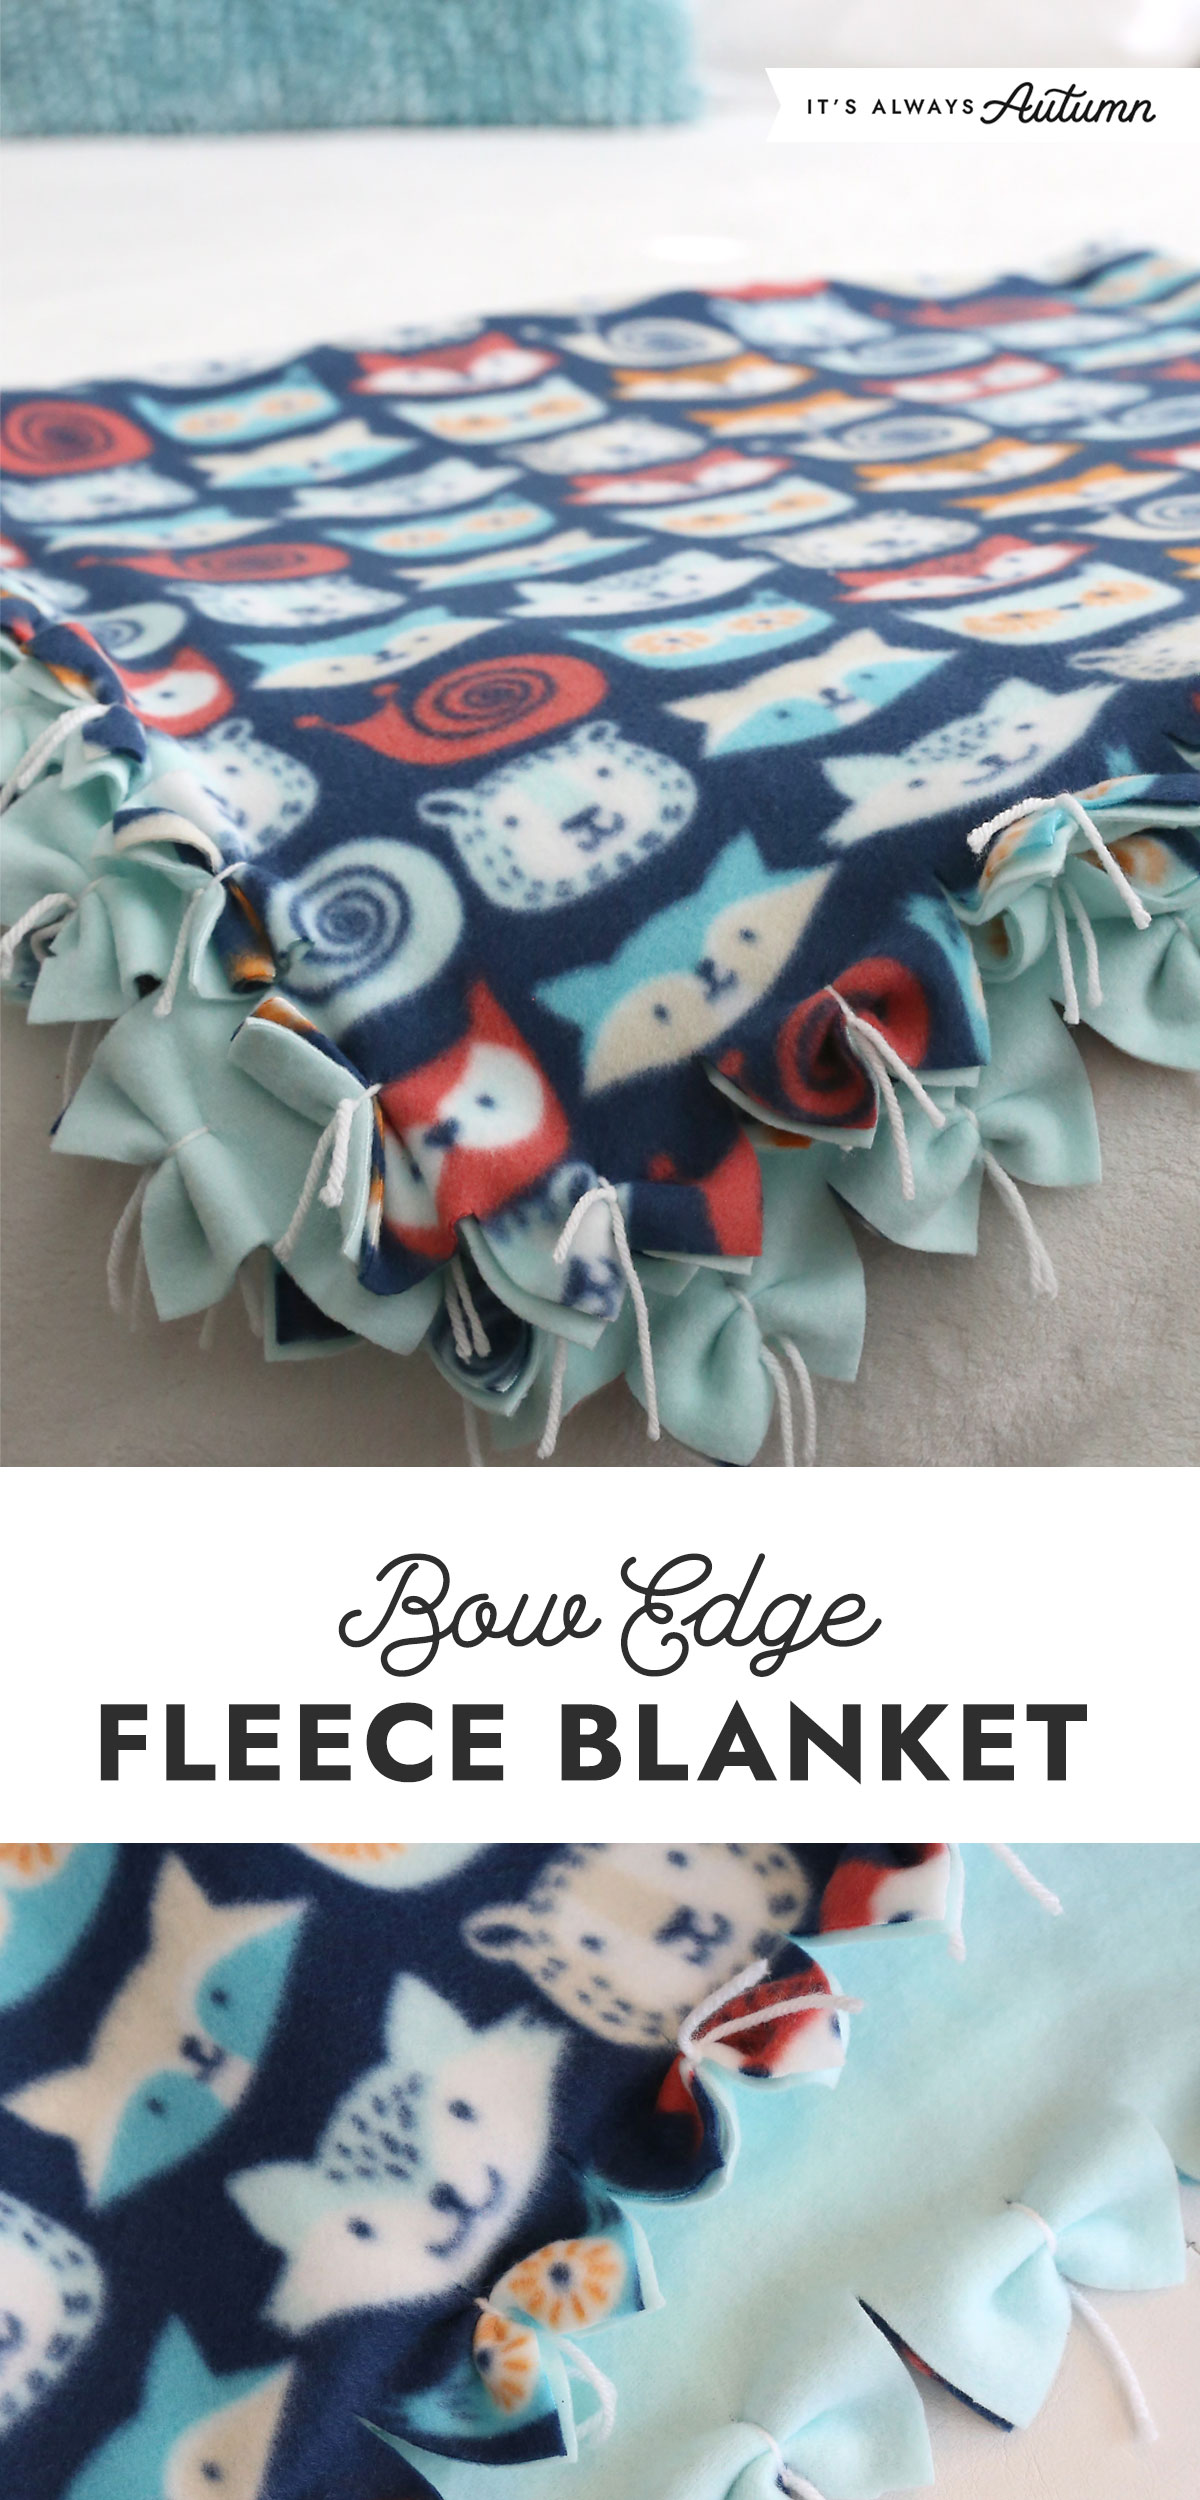 No Sew Fleece Blanket with a Bow Edge - It's Always Autumn